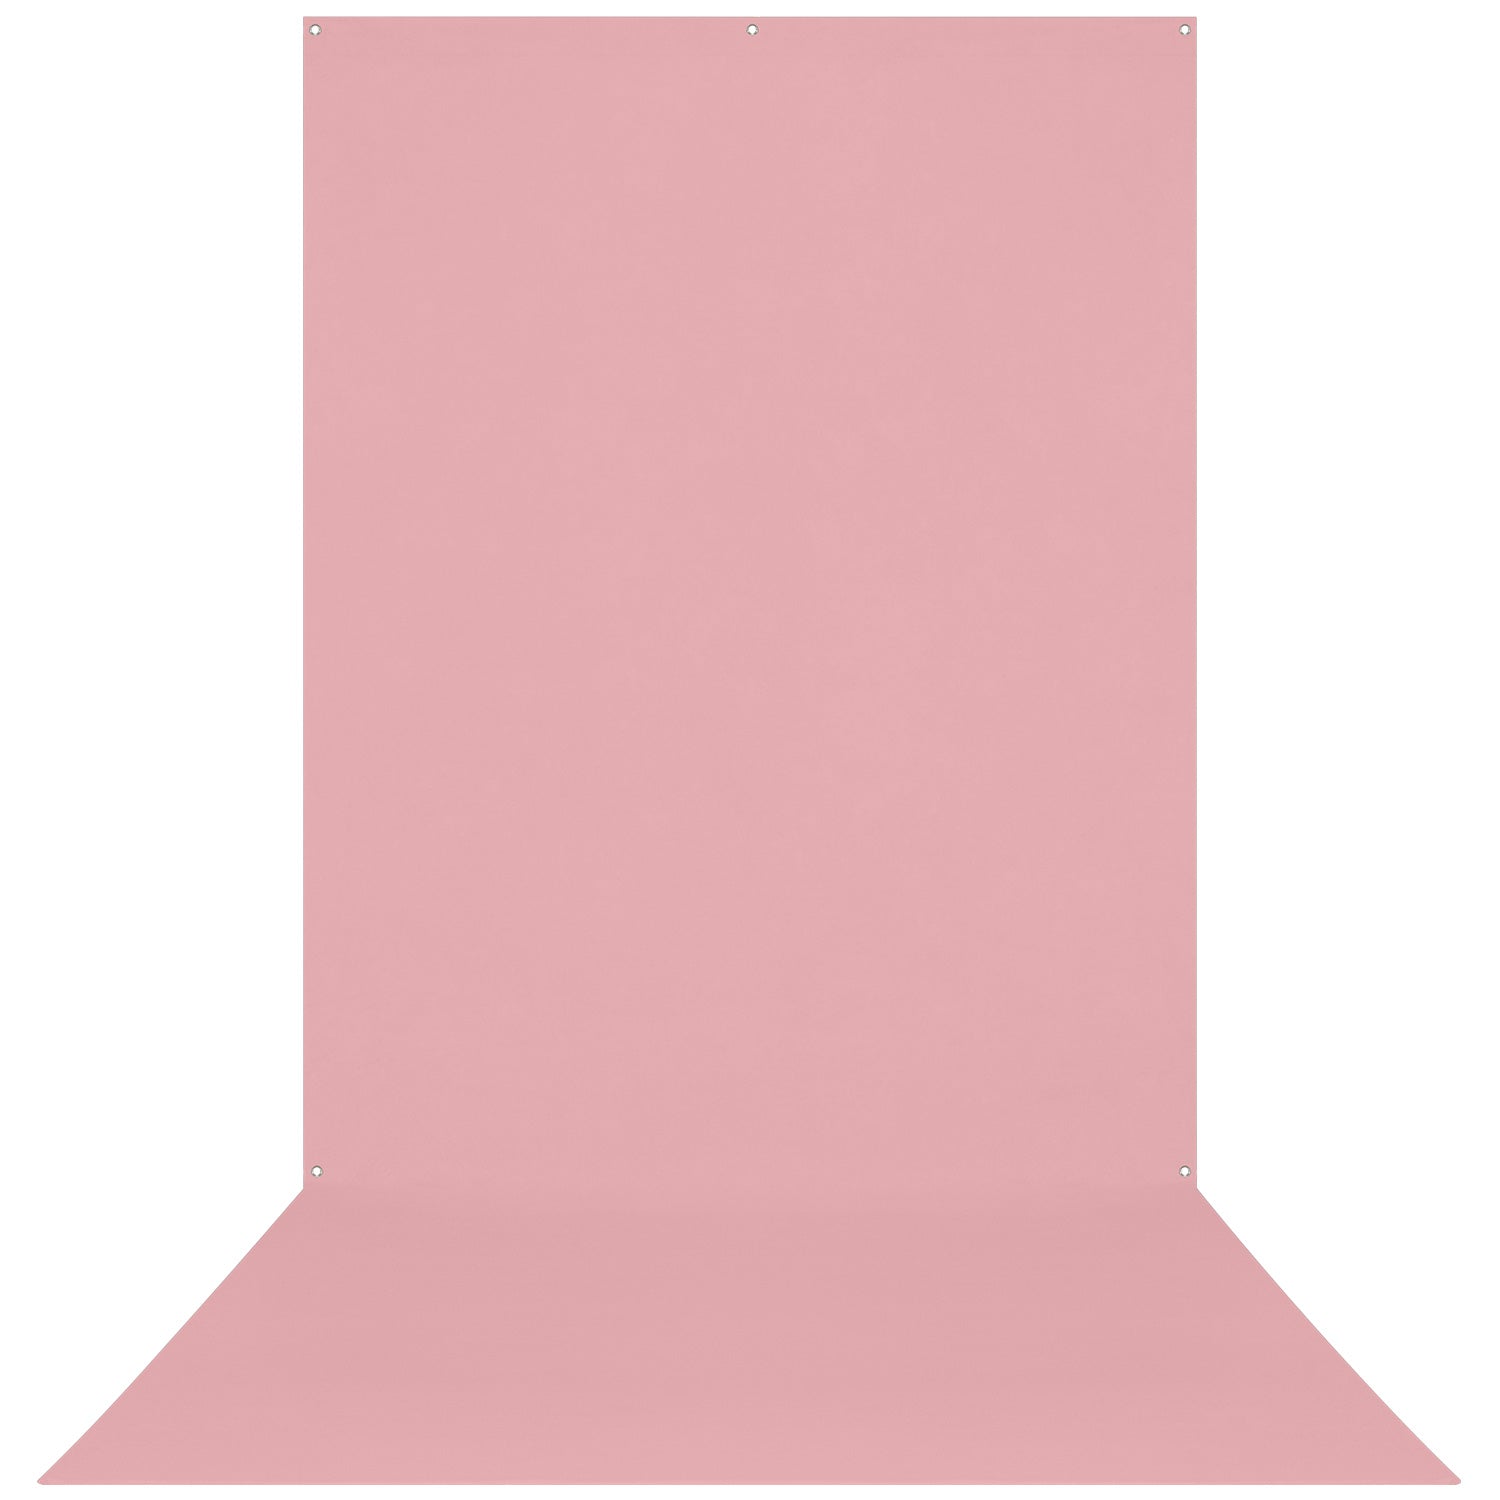 X-Drop Wrinkle-Resistant Backdrop - Blush Pink (5' x 12')